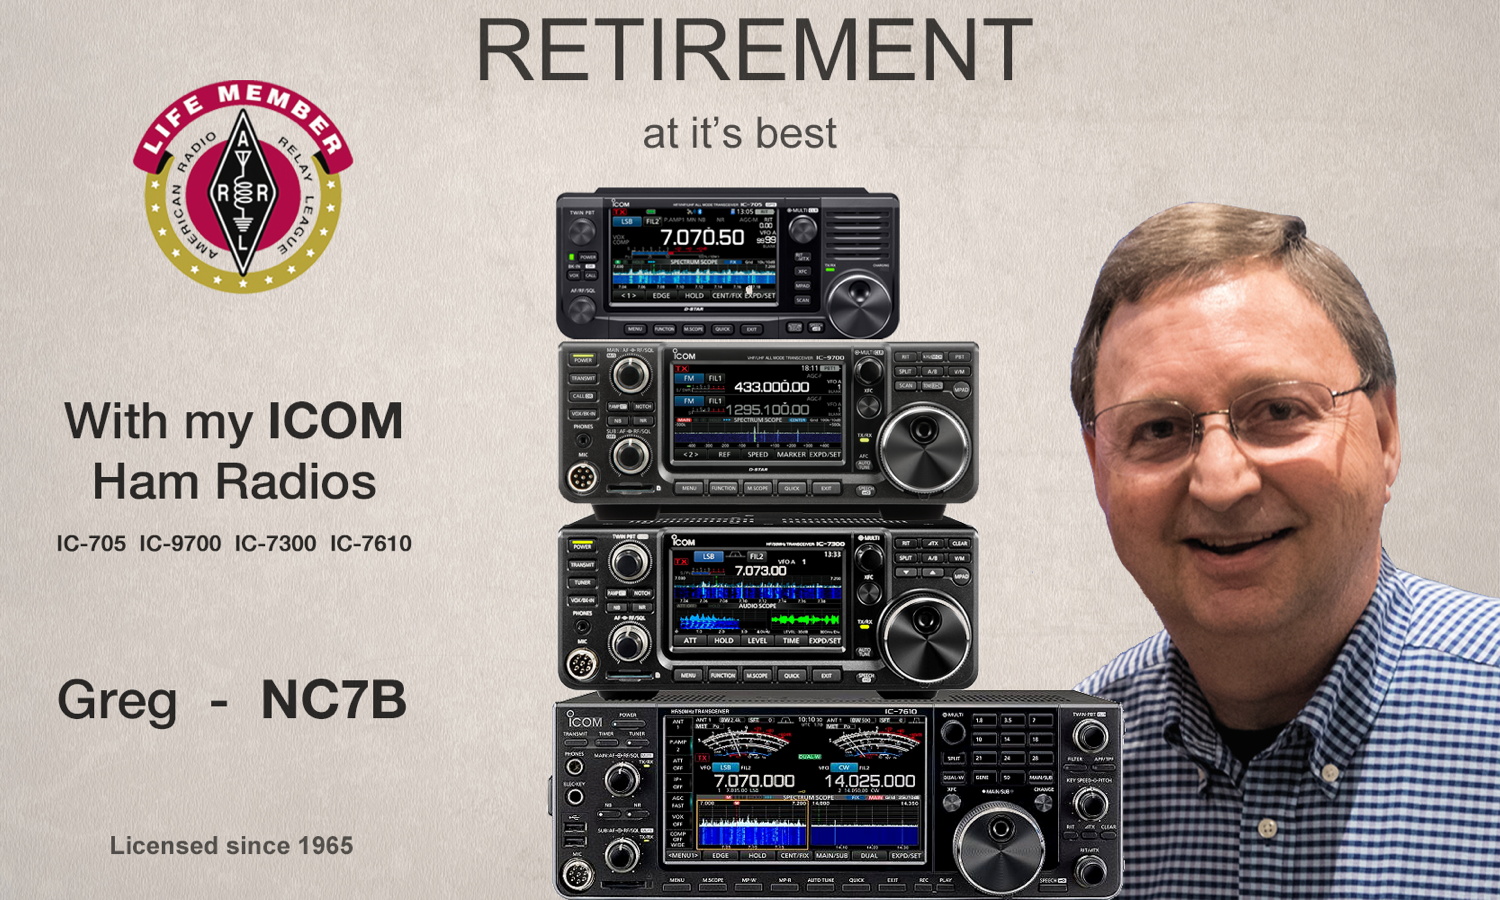 Retired with my ICOM radios